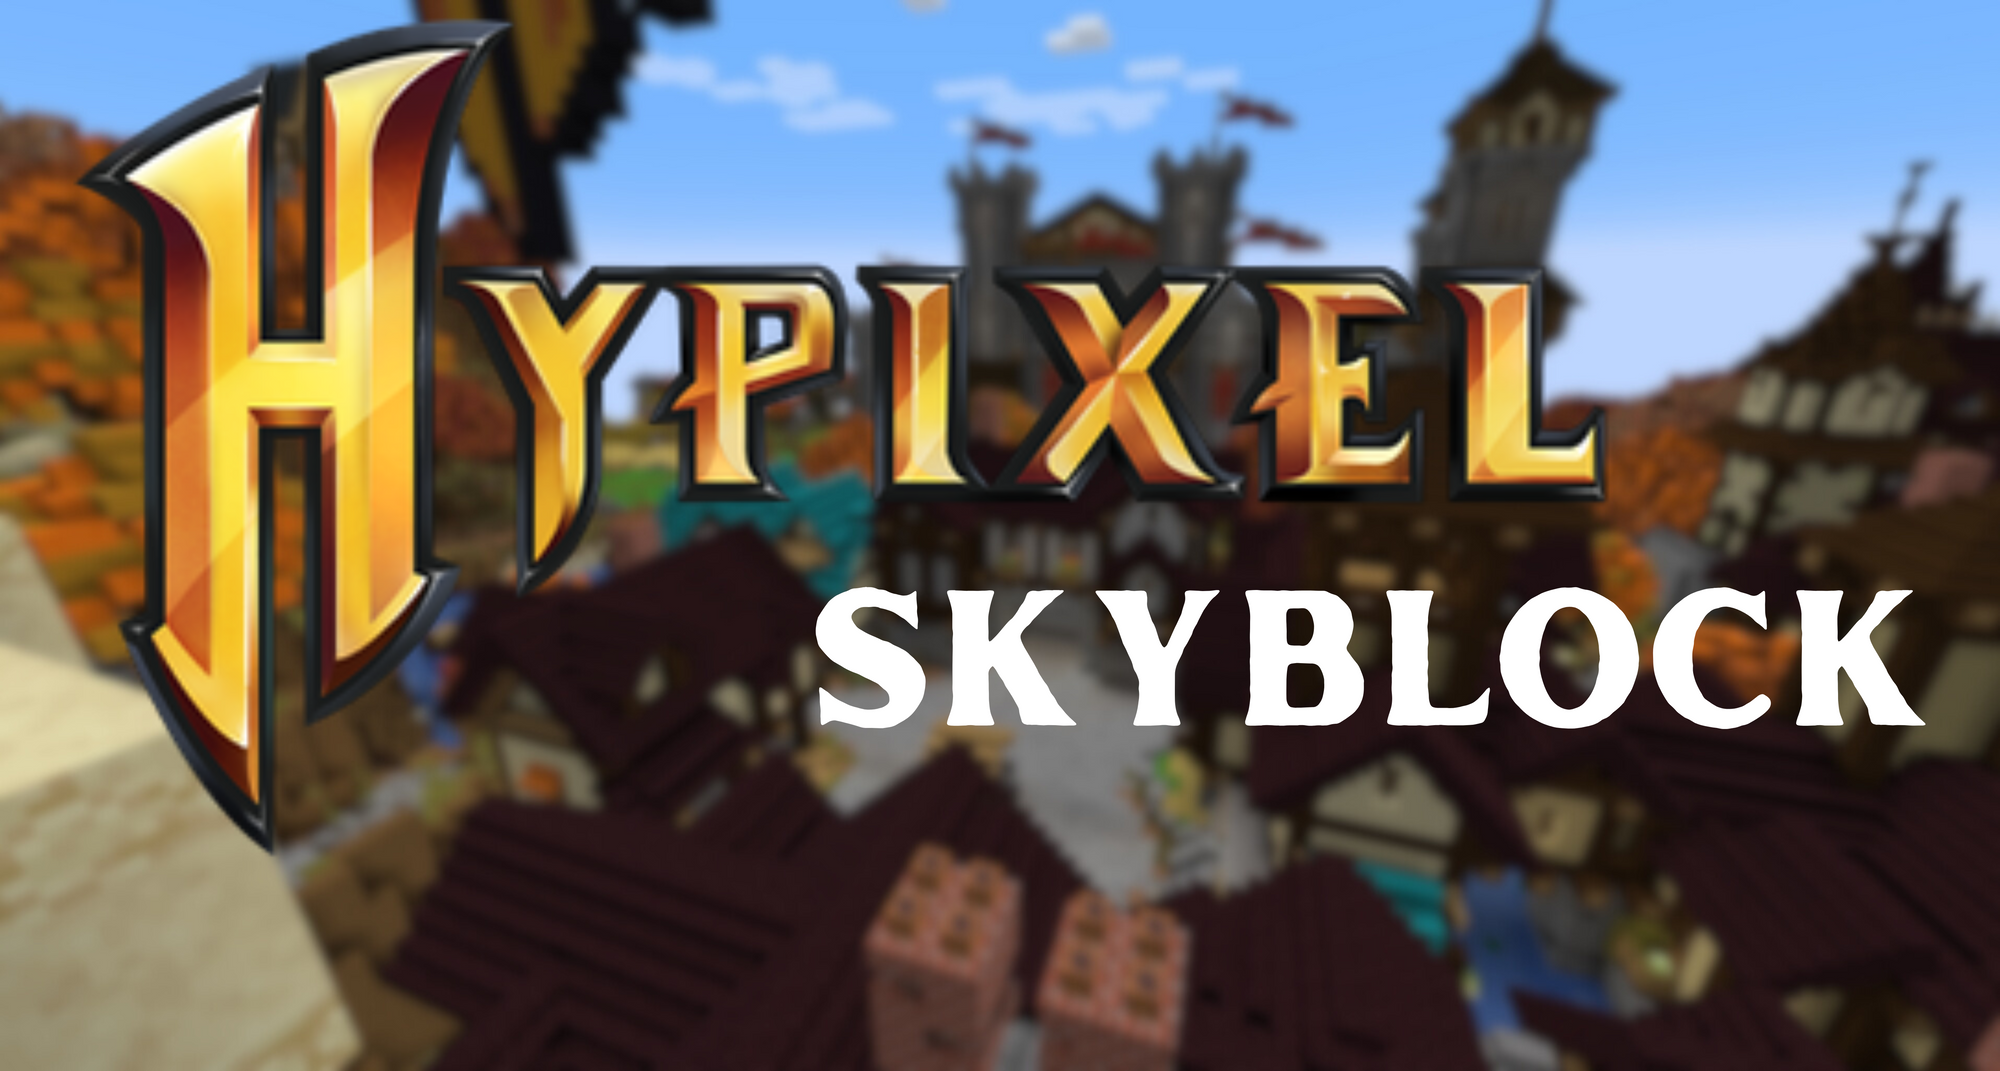 Thaumaturgist - Hypixel SkyBlock Wiki